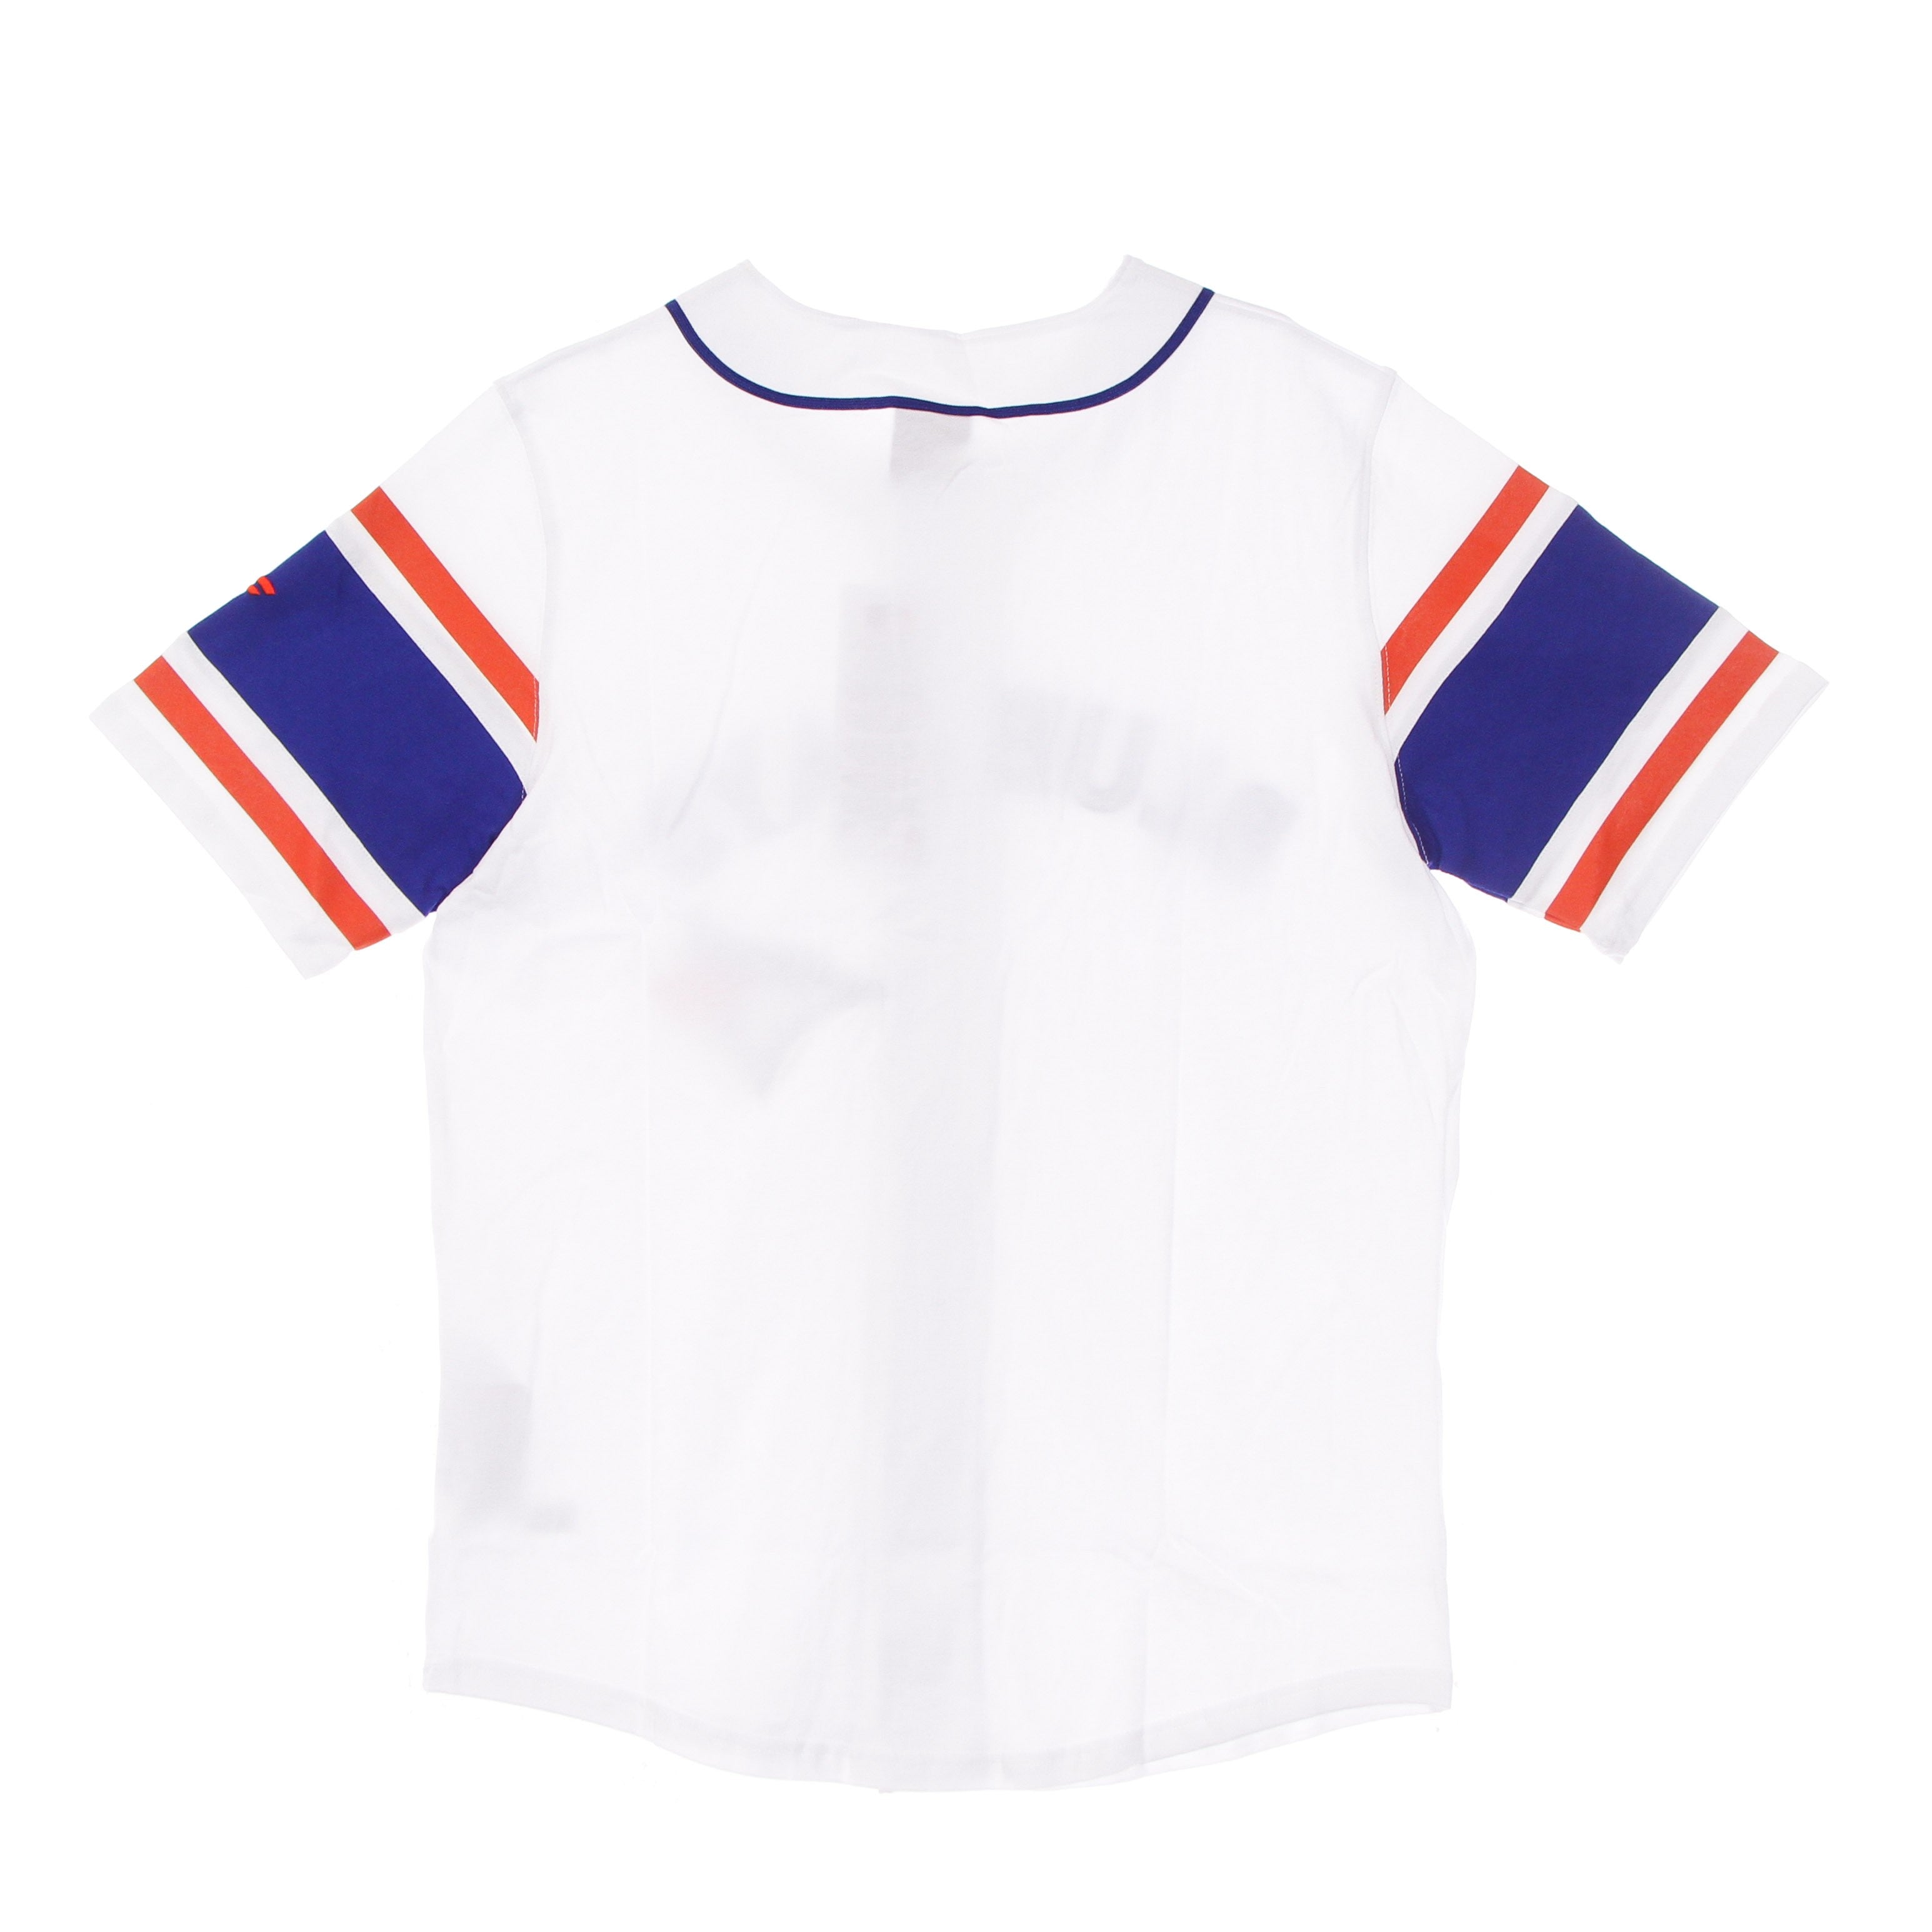 Men's Baseball Jacket Mlb Franchise Cotton Supporters Jersey Torblu White